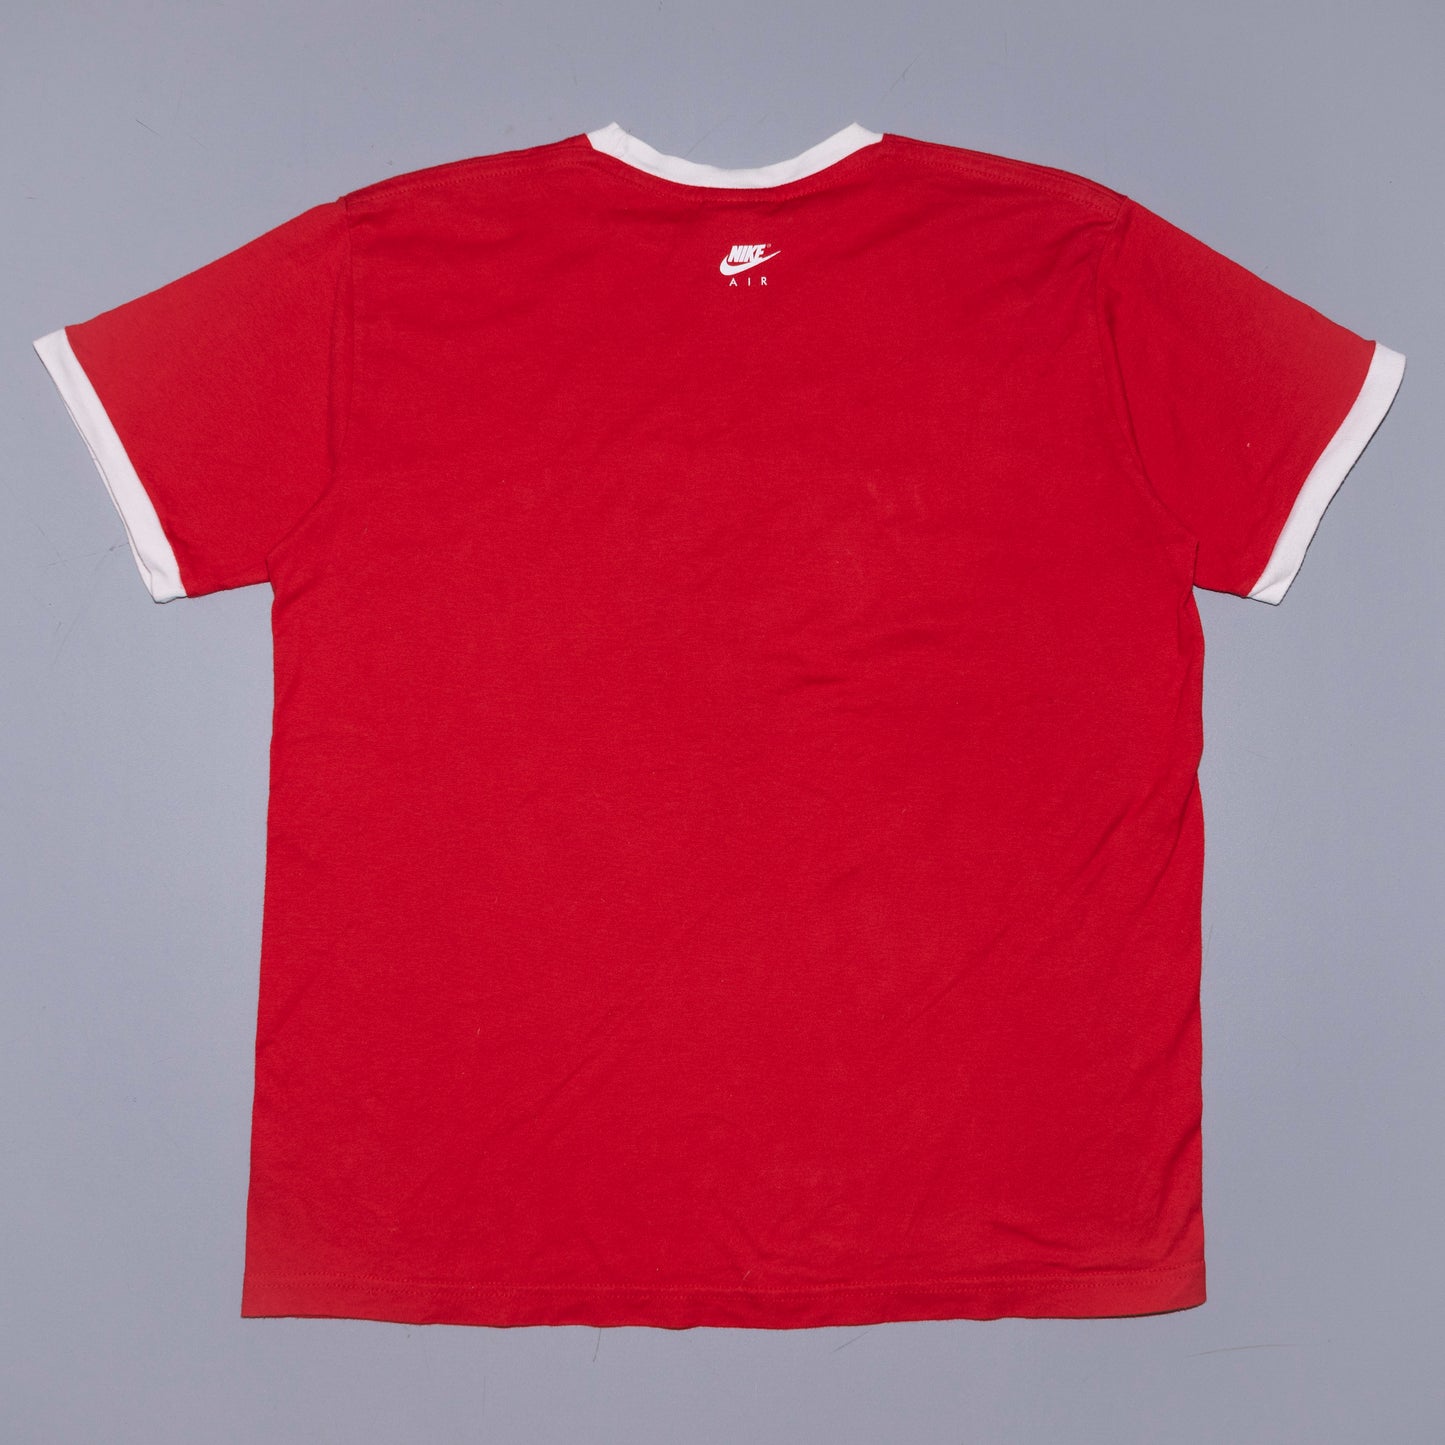 Nike Air Ringer T Shirt, XL